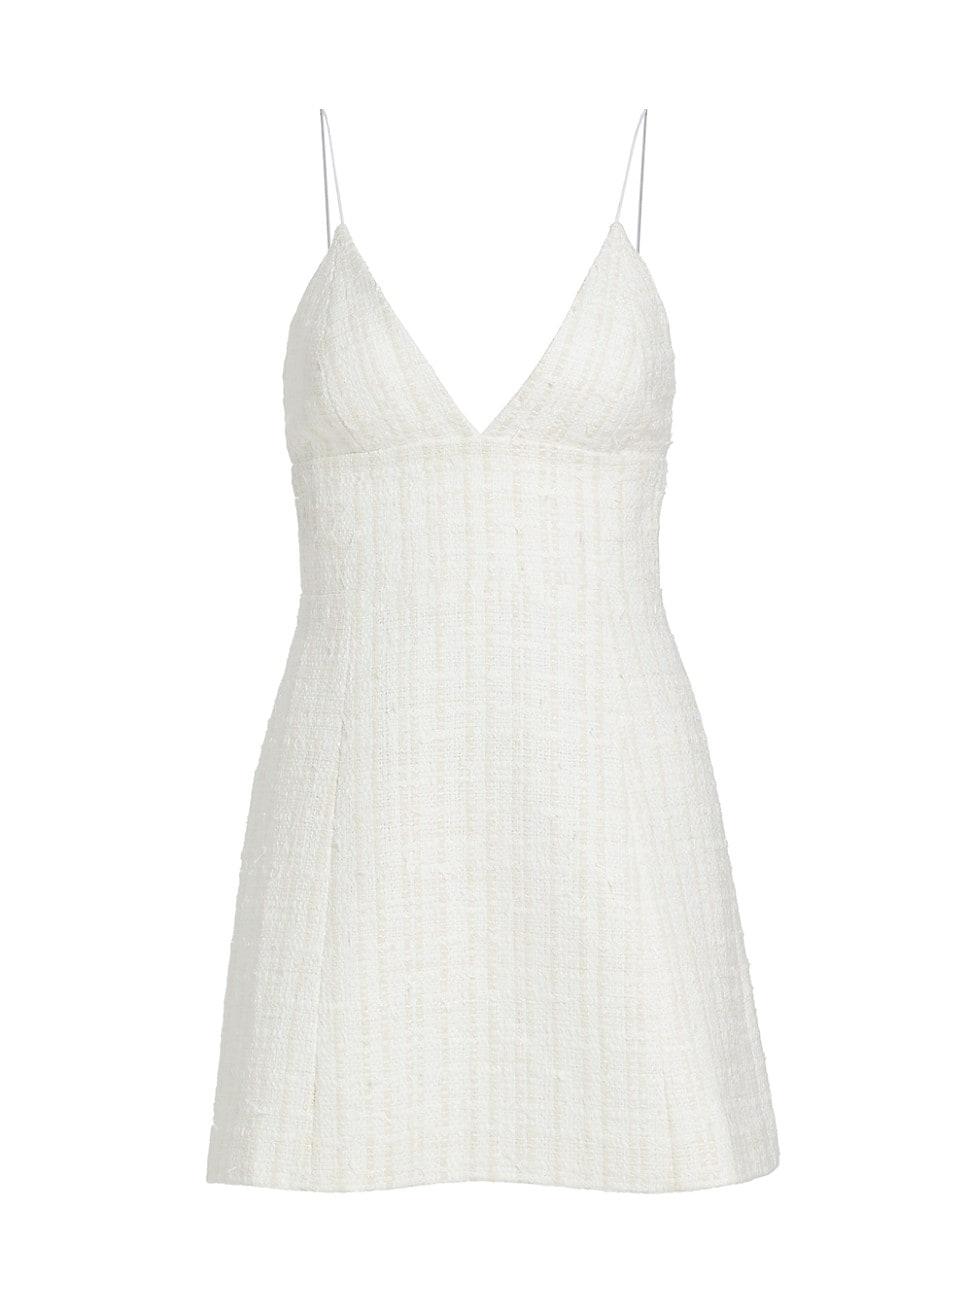 Alice + Olivia Carli Tweed Minidress in White | Lyst